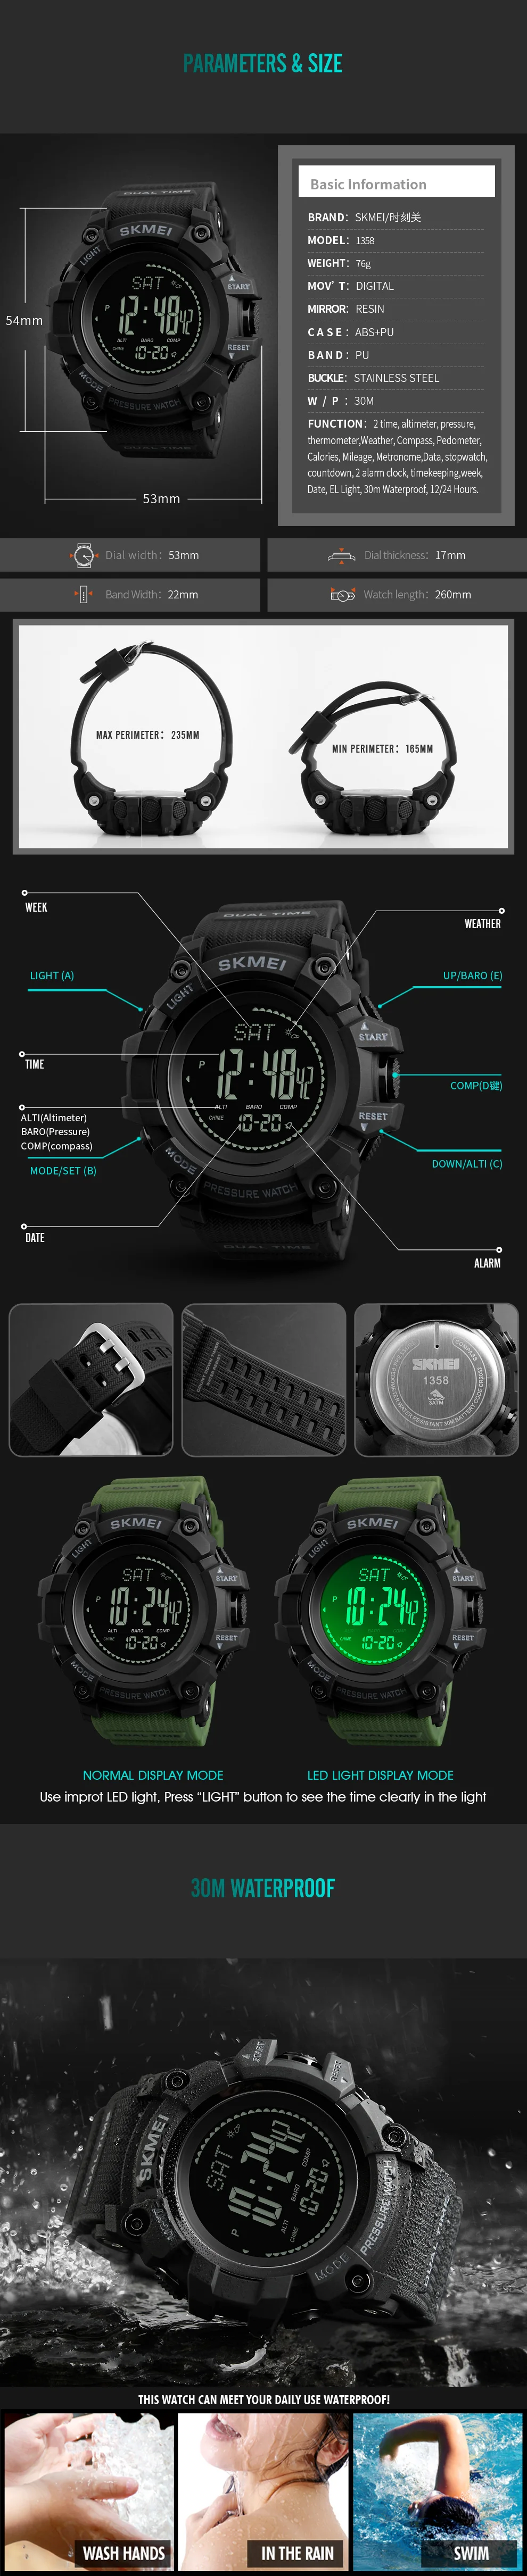 SKMEI Men's Sports Watches S SHOCK Military Compass Pedometer Calories Men Watch Digital Waterproof Electronic Wristwatches Male